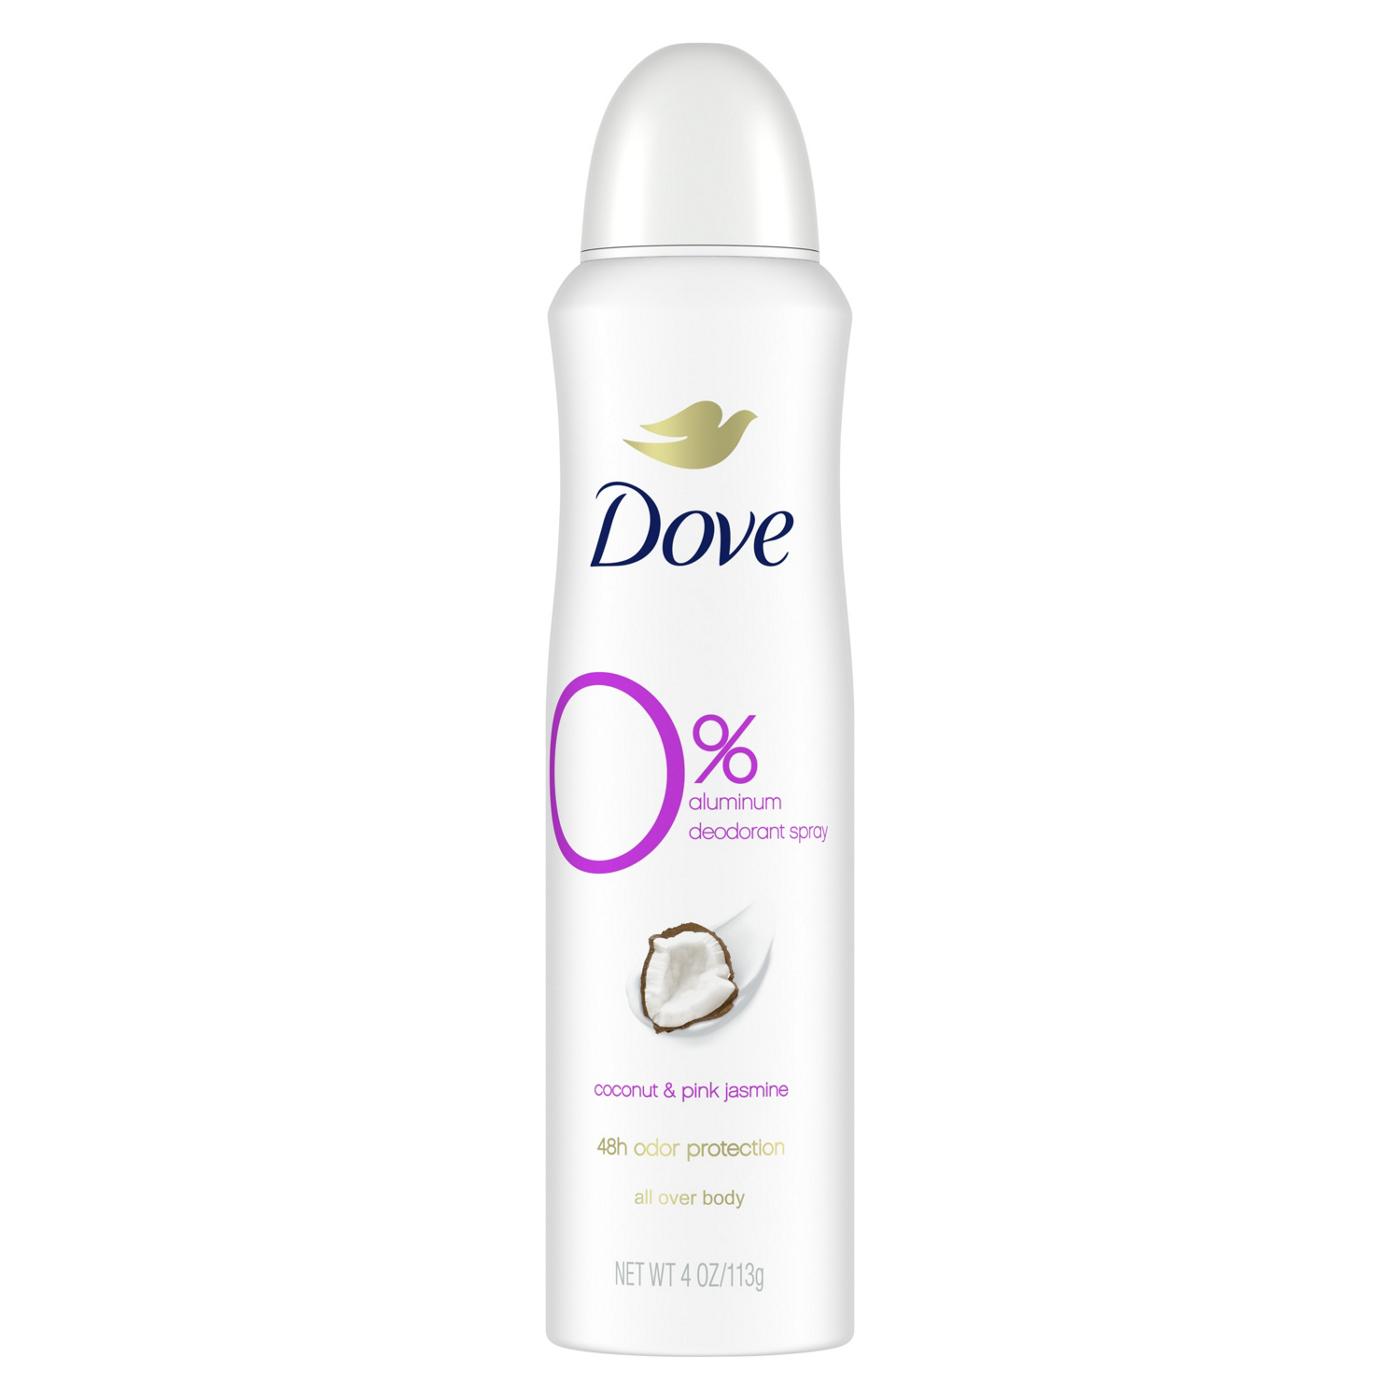 Under ~ krystal renæssance Dove Aluminum Free Deodorant Spray - Coconut & Pink Jasmine - Shop Deodorant  & Antiperspirant at H-E-B